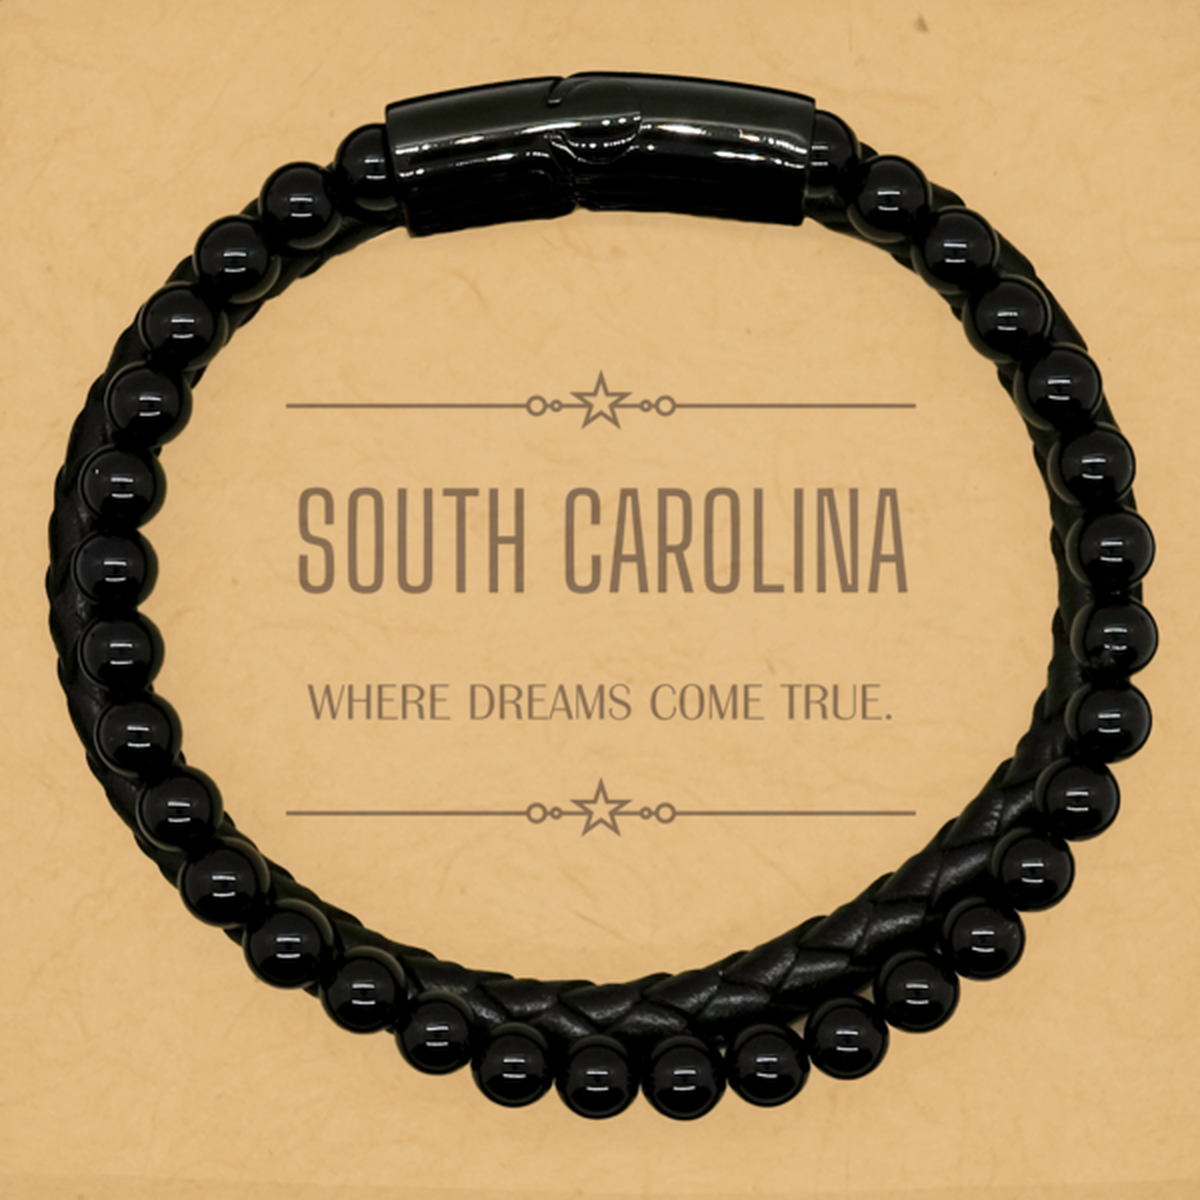 Love South Carolina State Stone Leather Bracelets, South Carolina Where dreams come true, Birthday Inspirational Gifts For South Carolina Men, Women, Friends